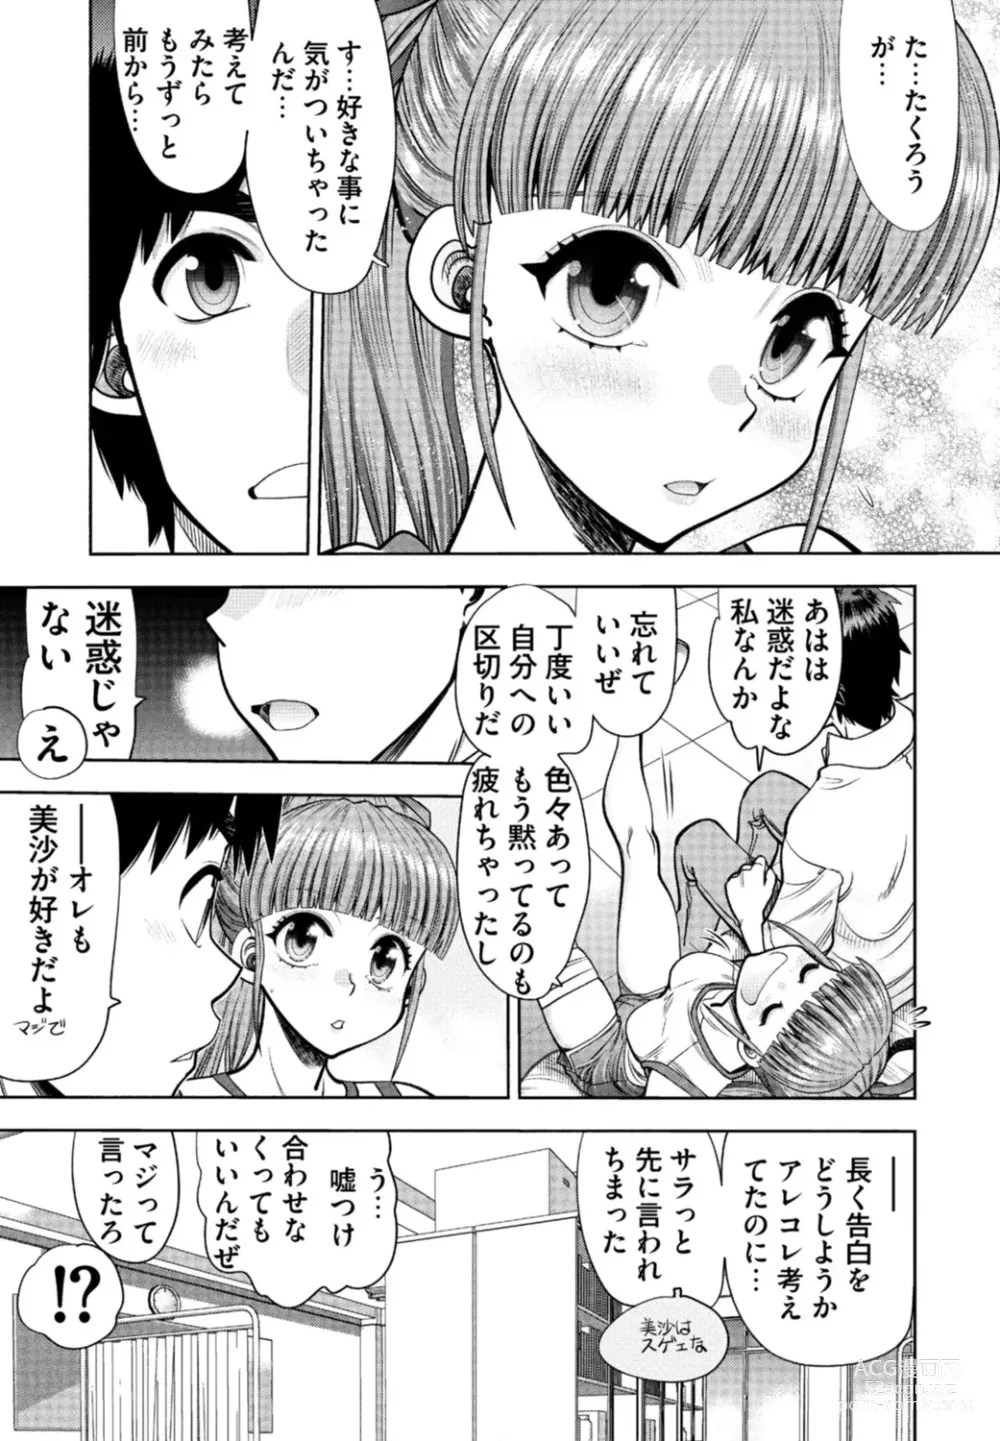 Page 173 of manga Doukyuusei  Remake Adult Edition